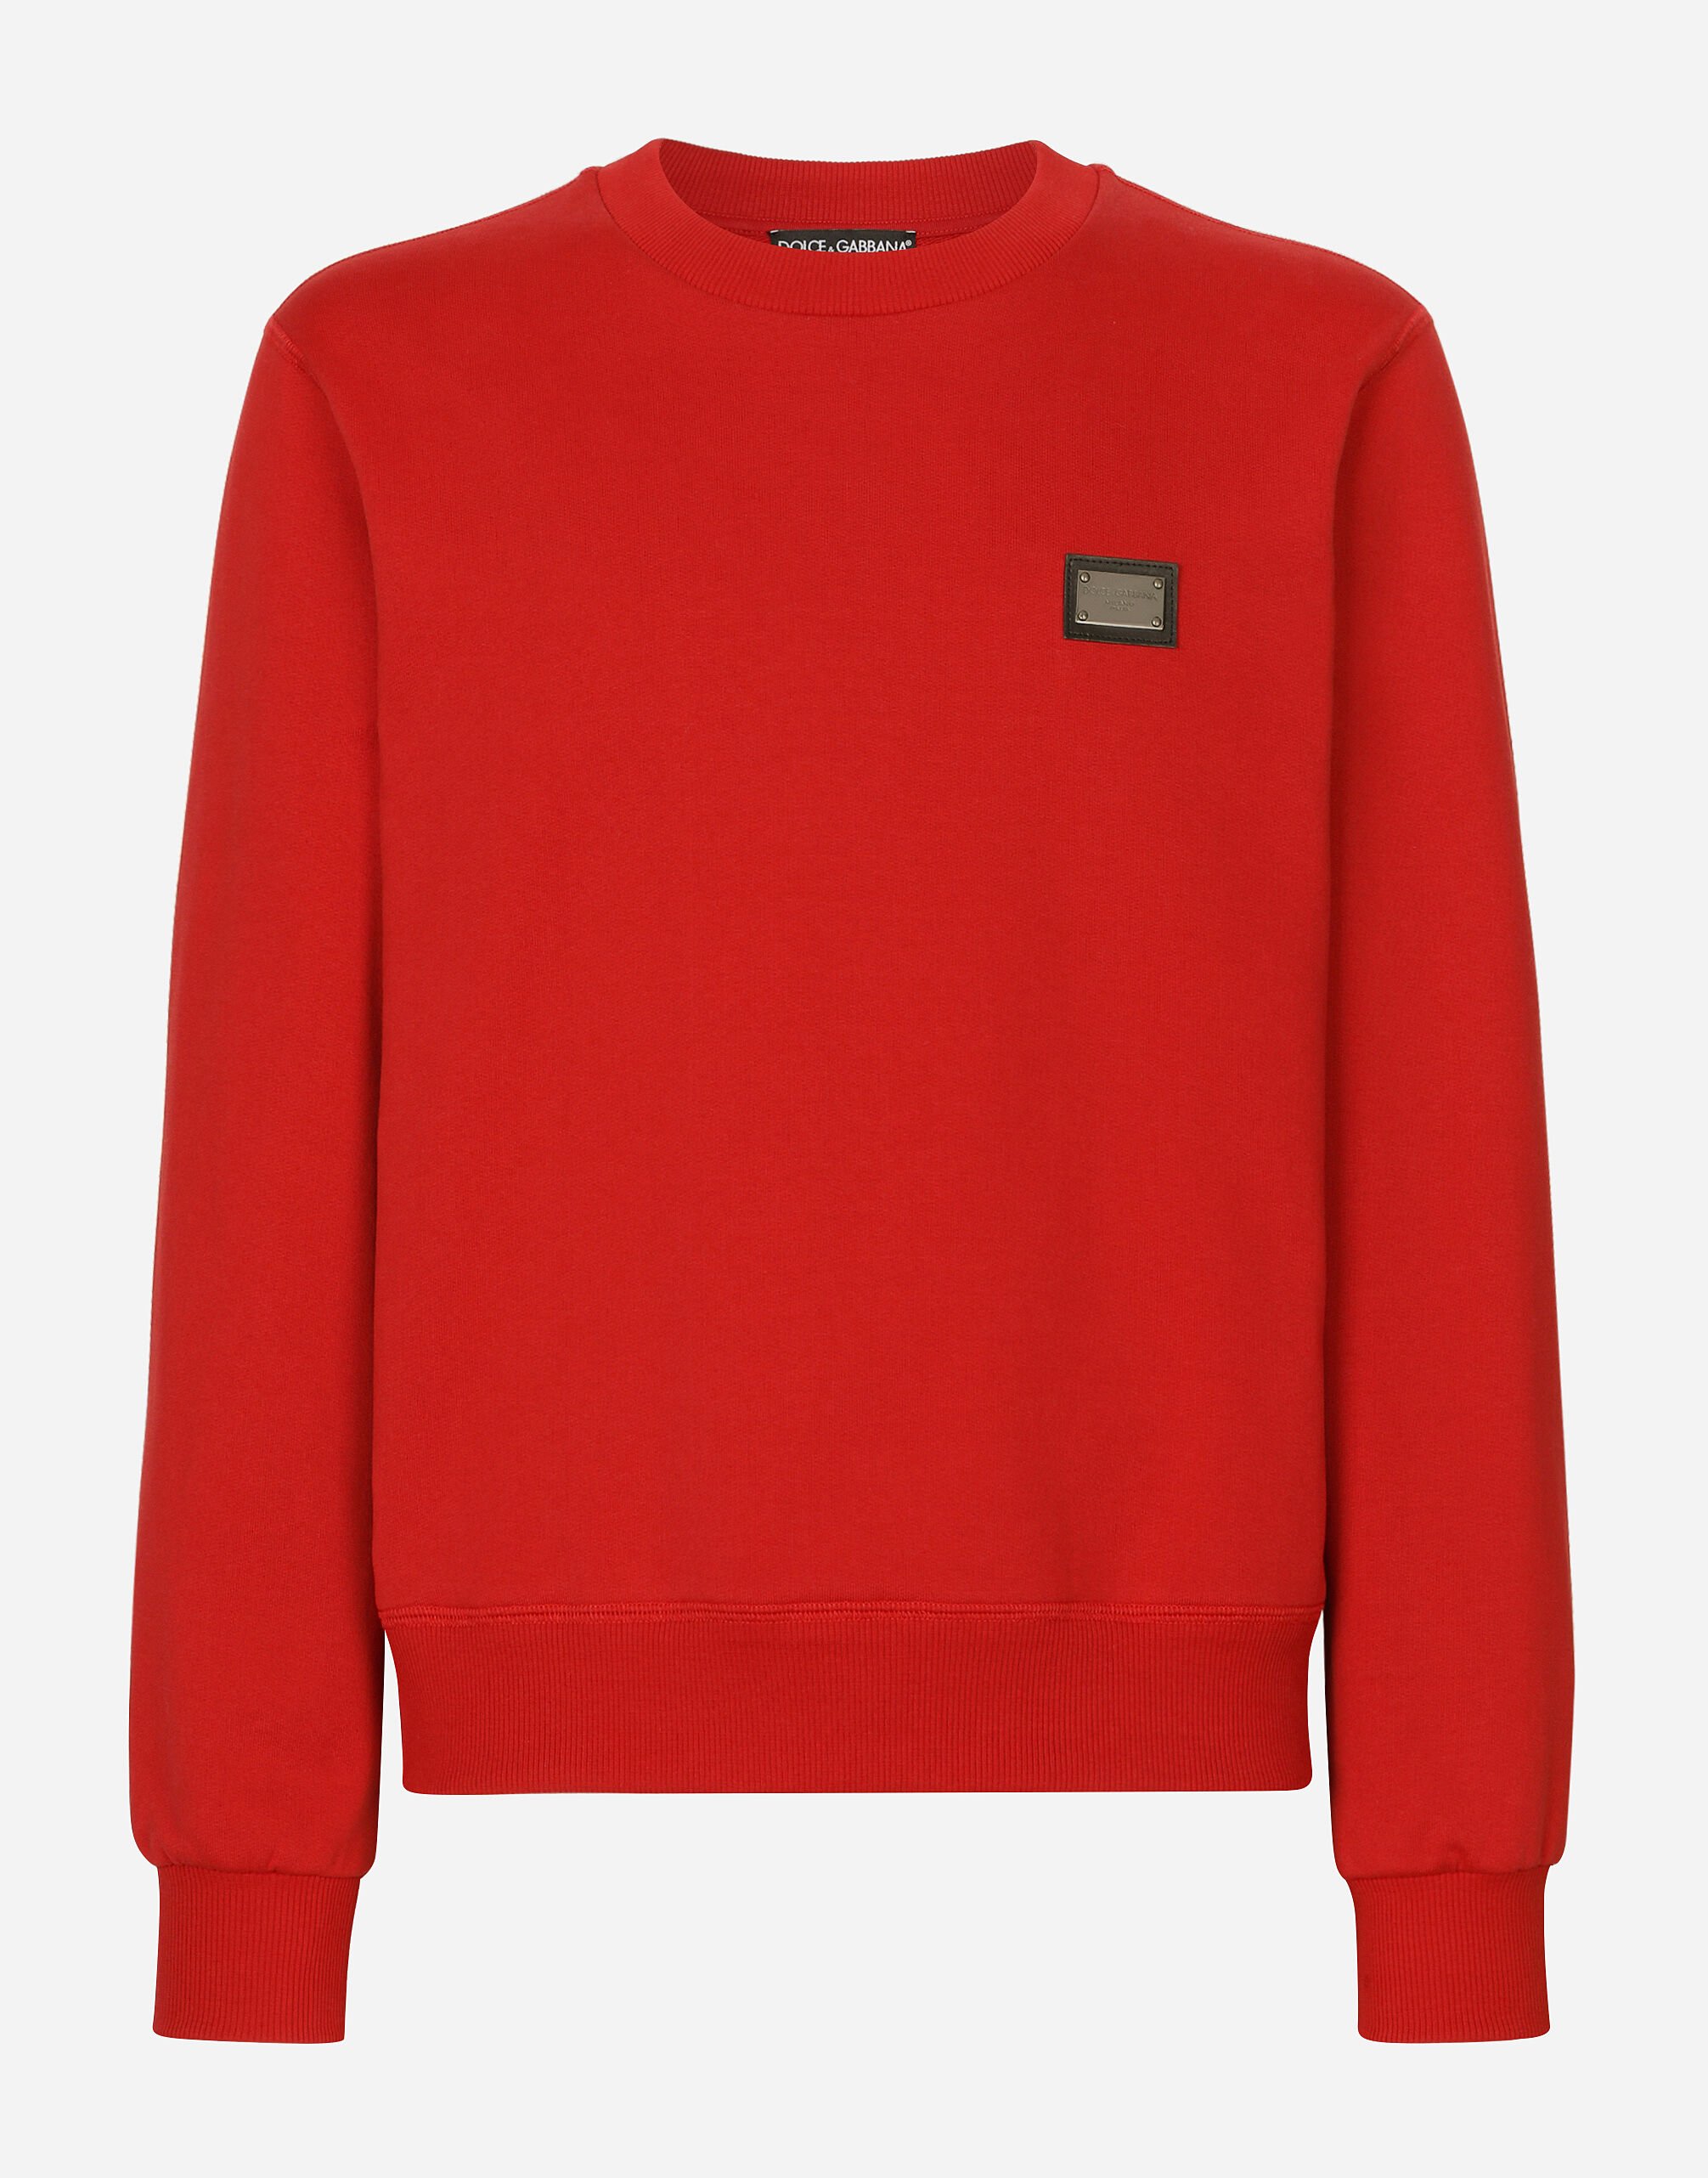 Dolce&Gabbana Jersey sweatshirt with branded tag Red G9ZU0TG7F2G